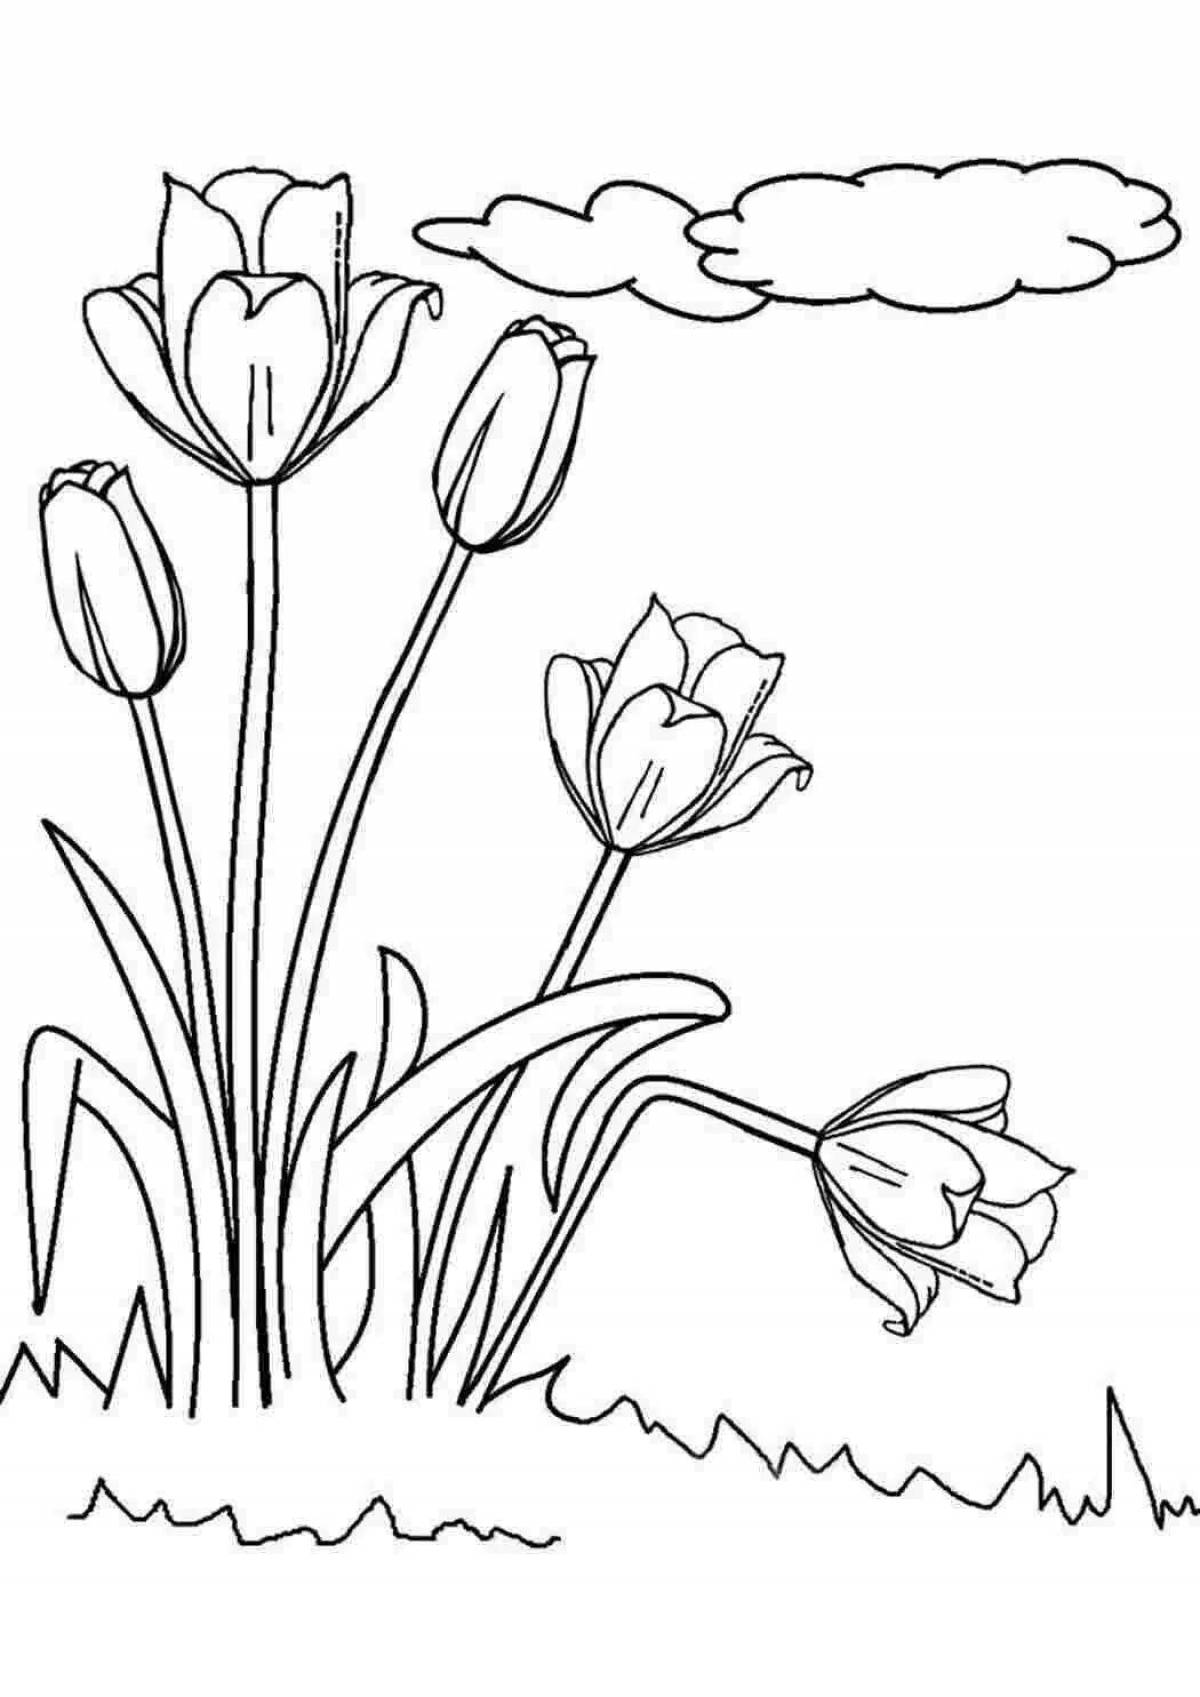 Spring tulips #2